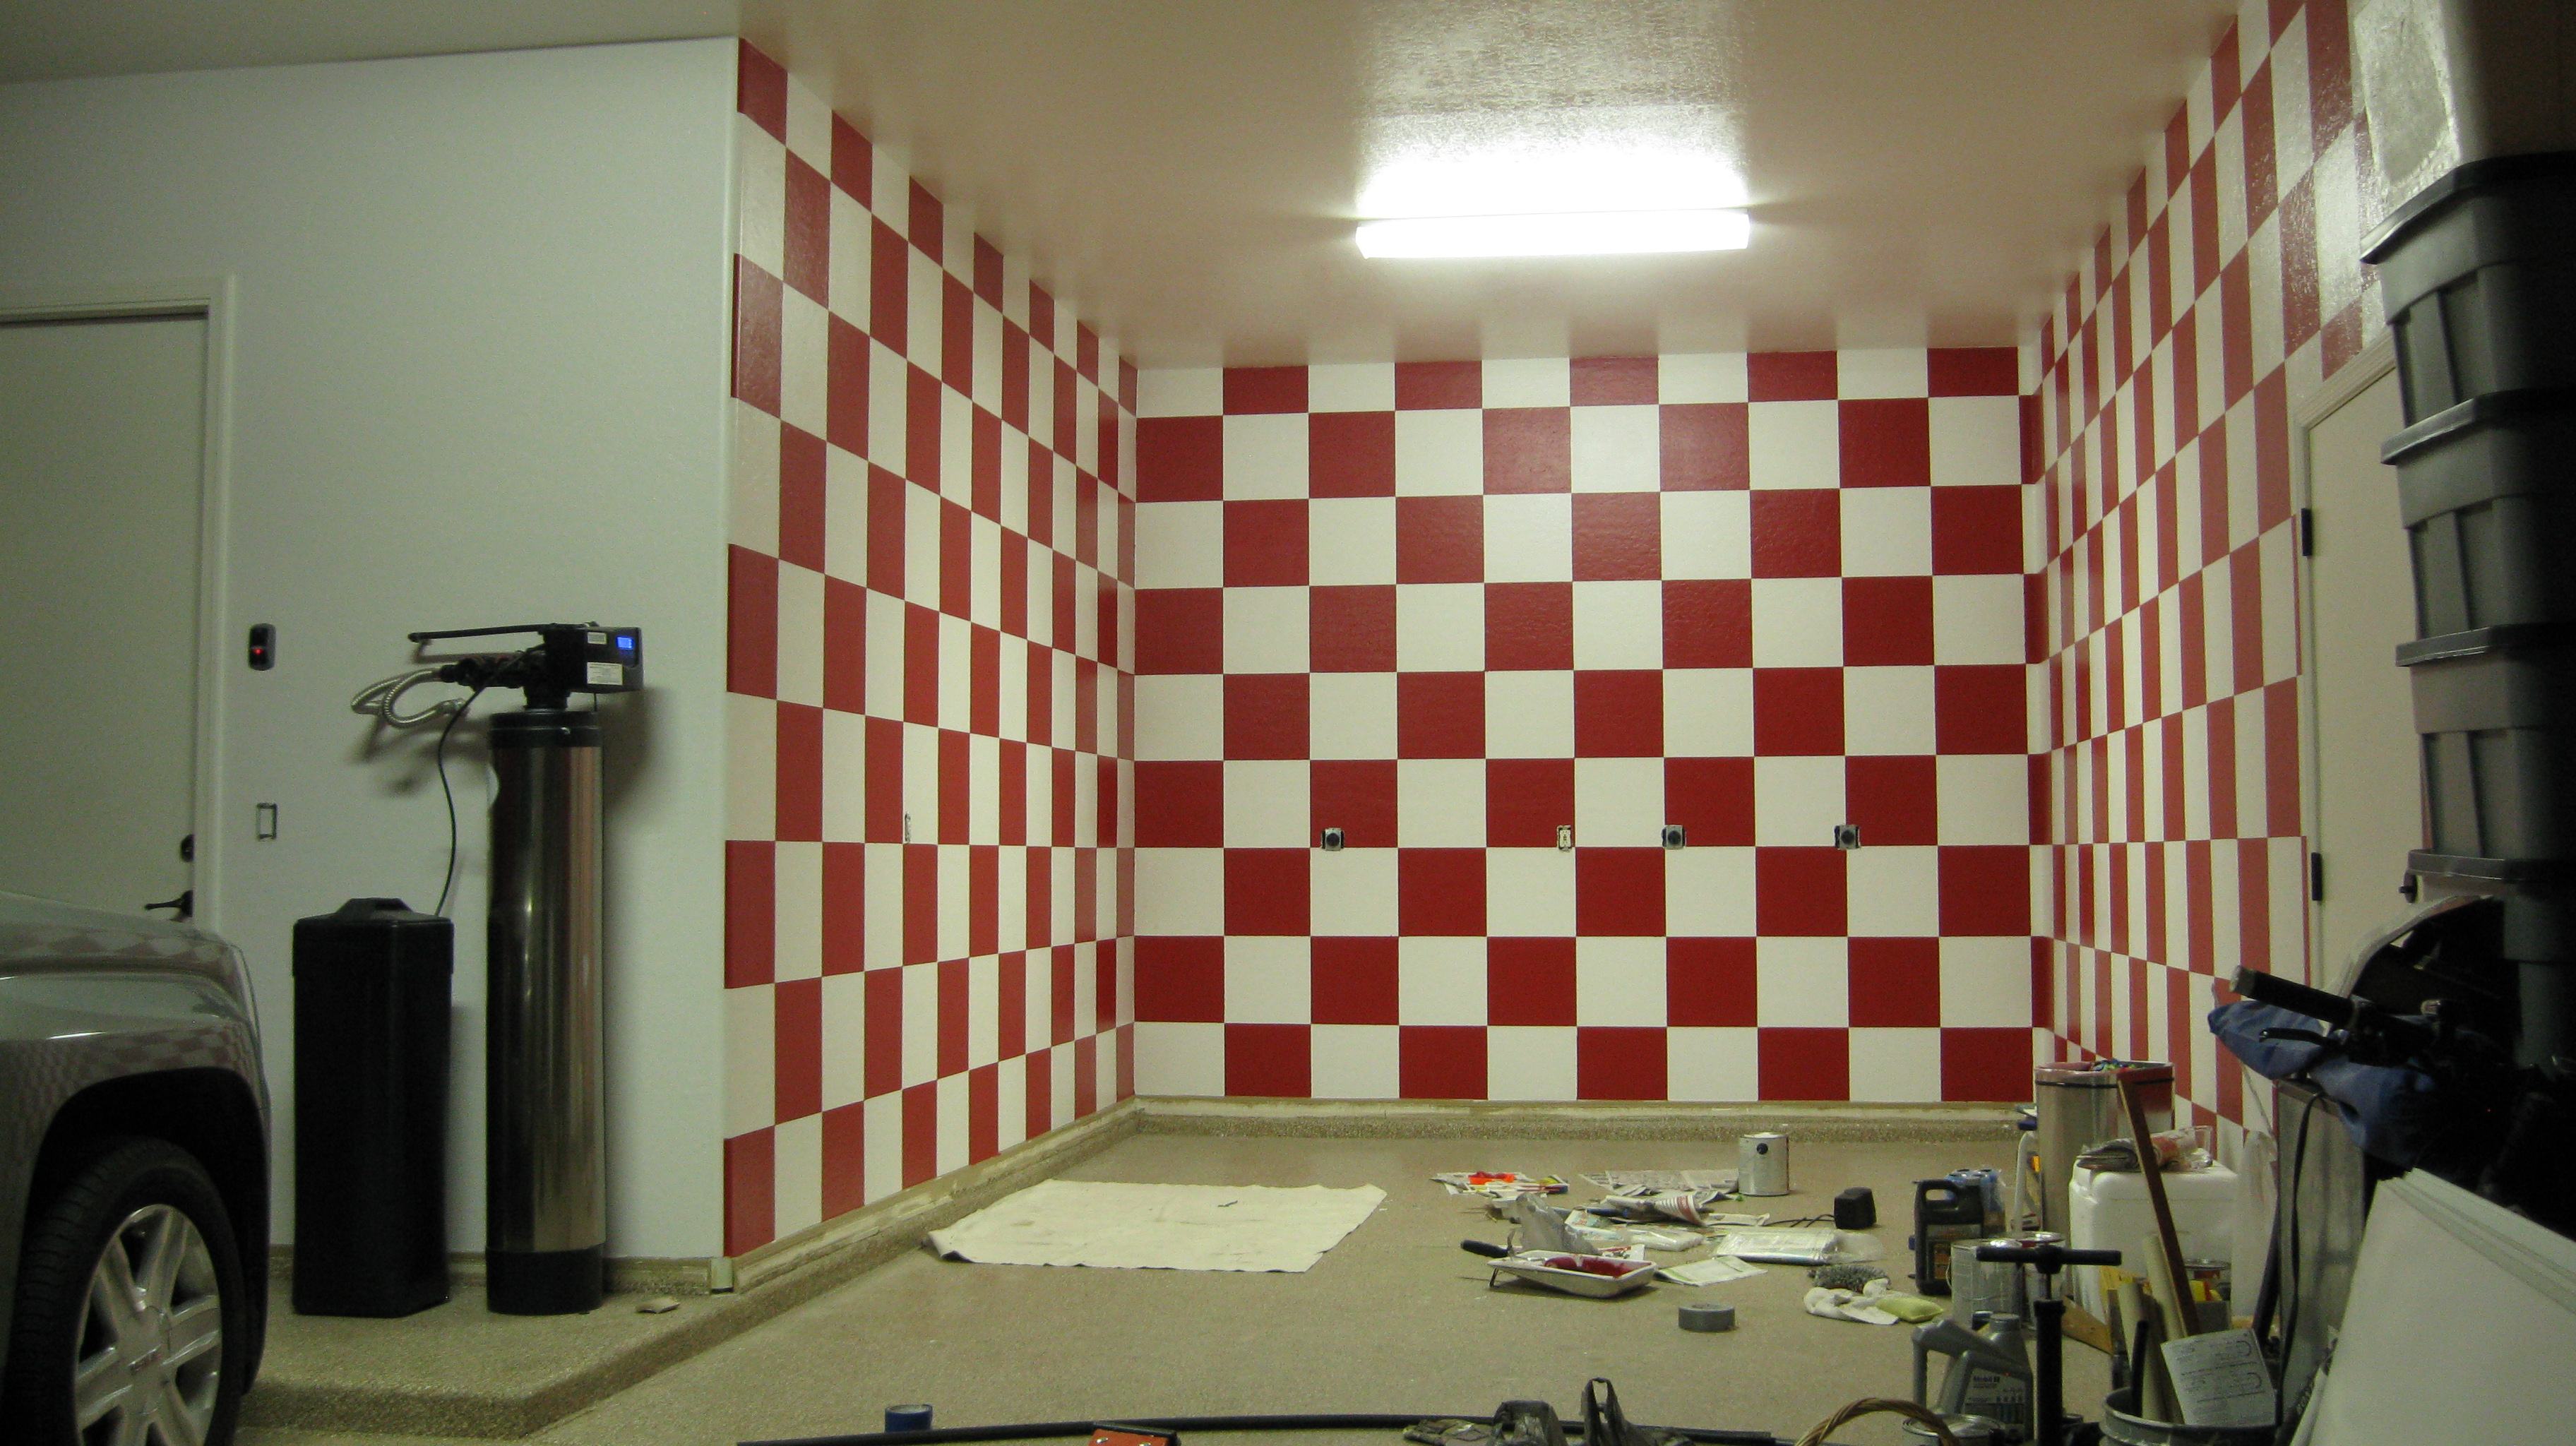 Checkerboard back walls. Awesome! :) | interesting stuff | Pinterest ...